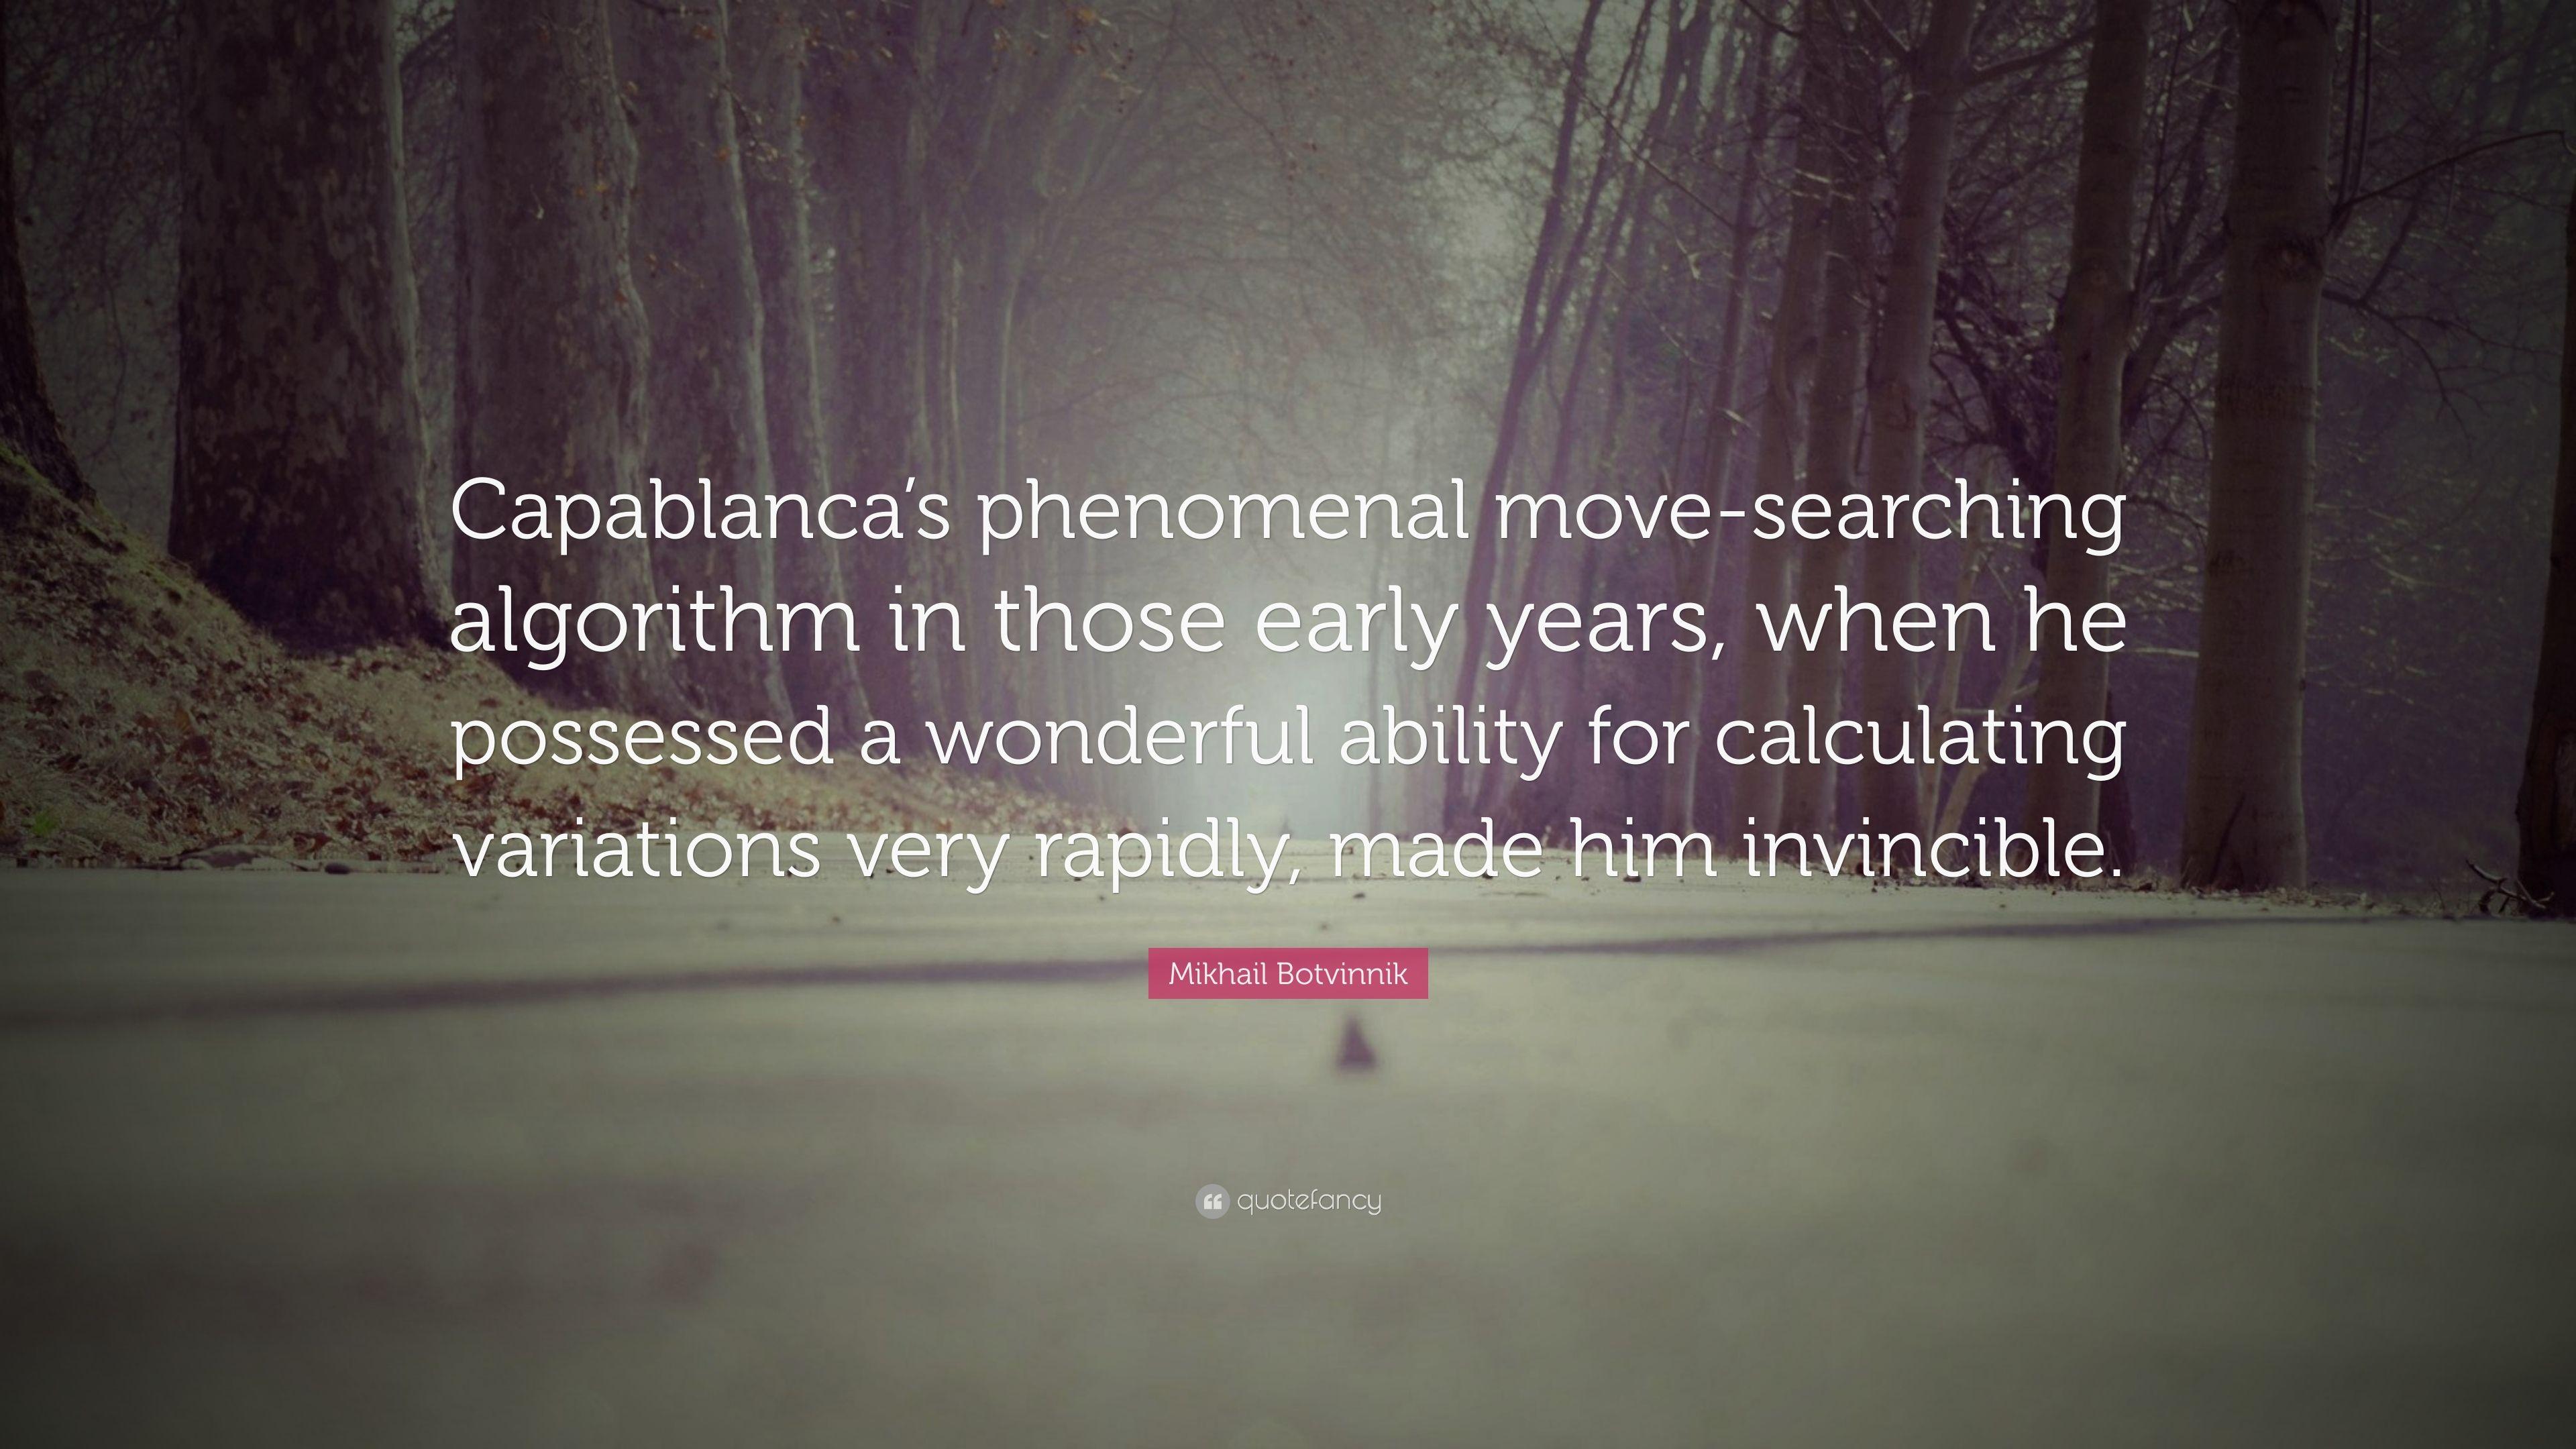 Mikhail Botvinnik Quote: “Capablanca's Phenomenal Move Searching